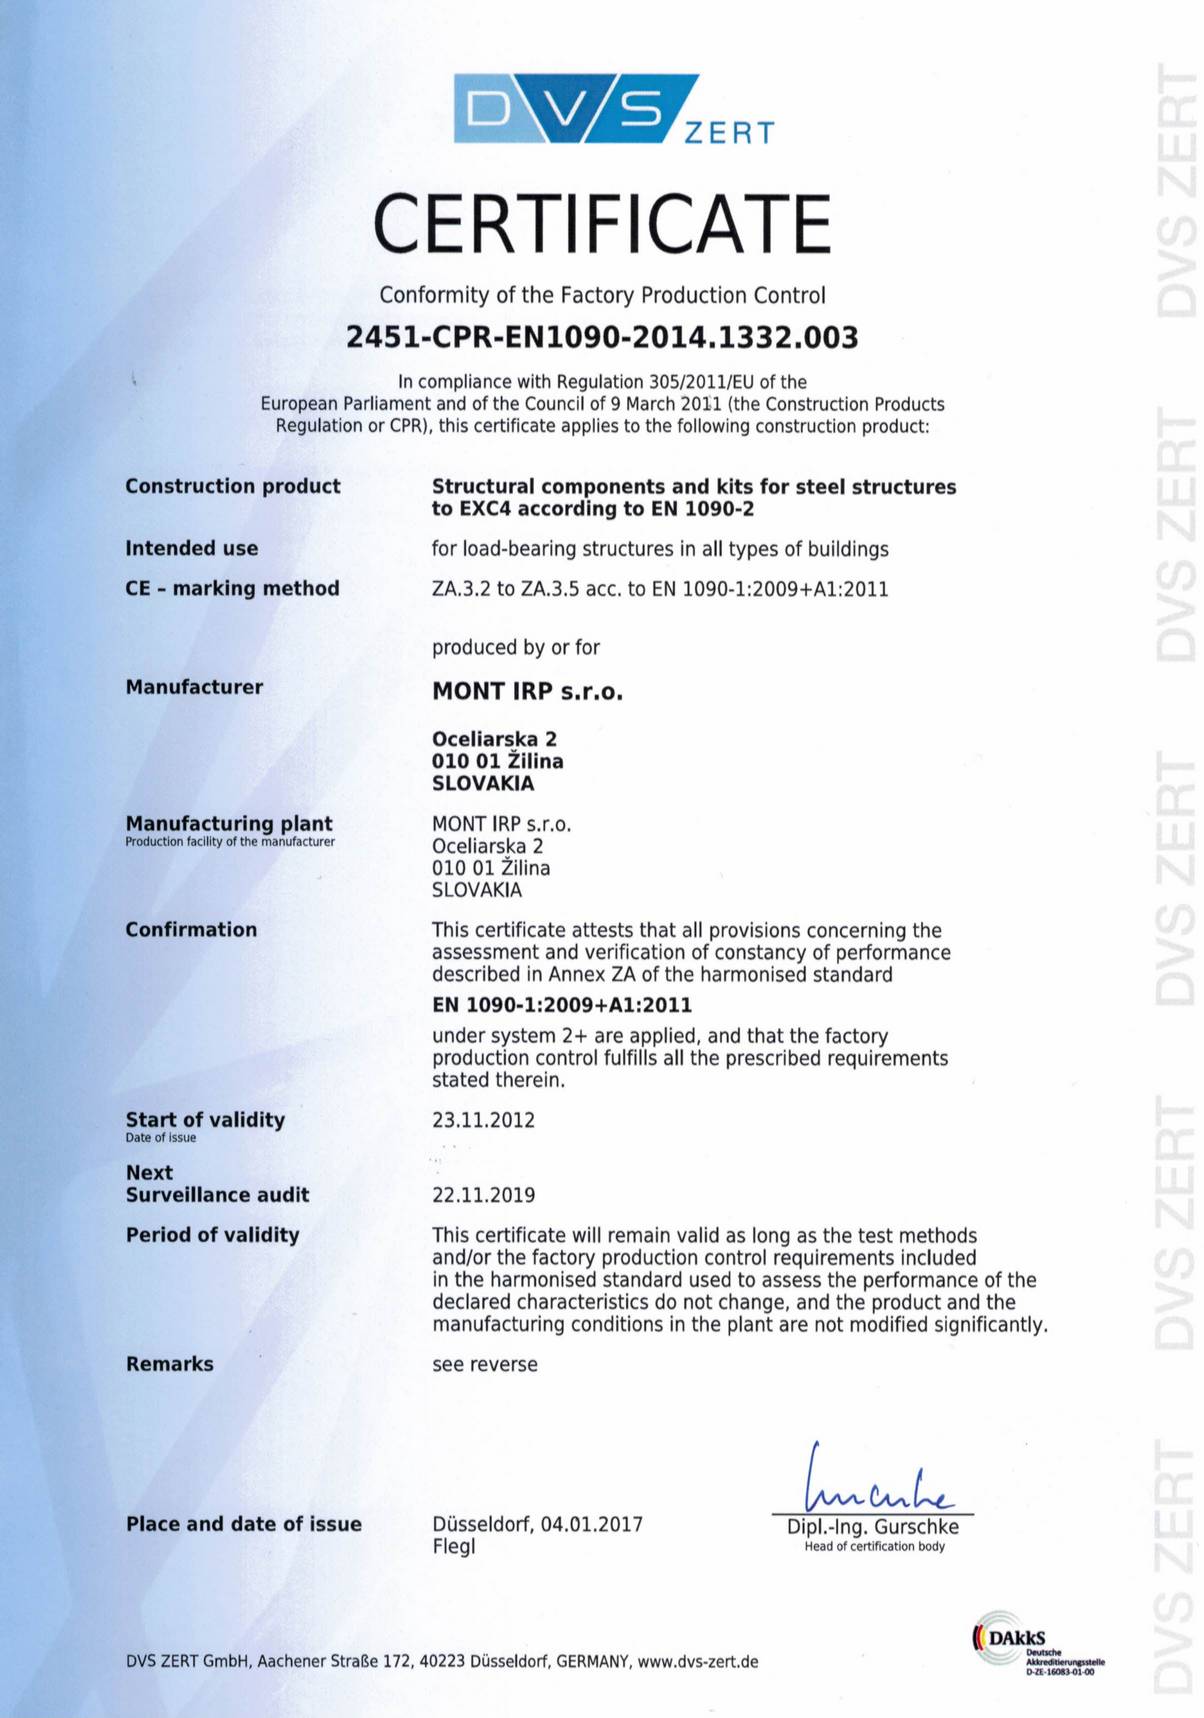 Certificate-DVS-2451-CPR-EN1090-2014.1332.003-EXC4-EN-do.22.11.2019_Page_1